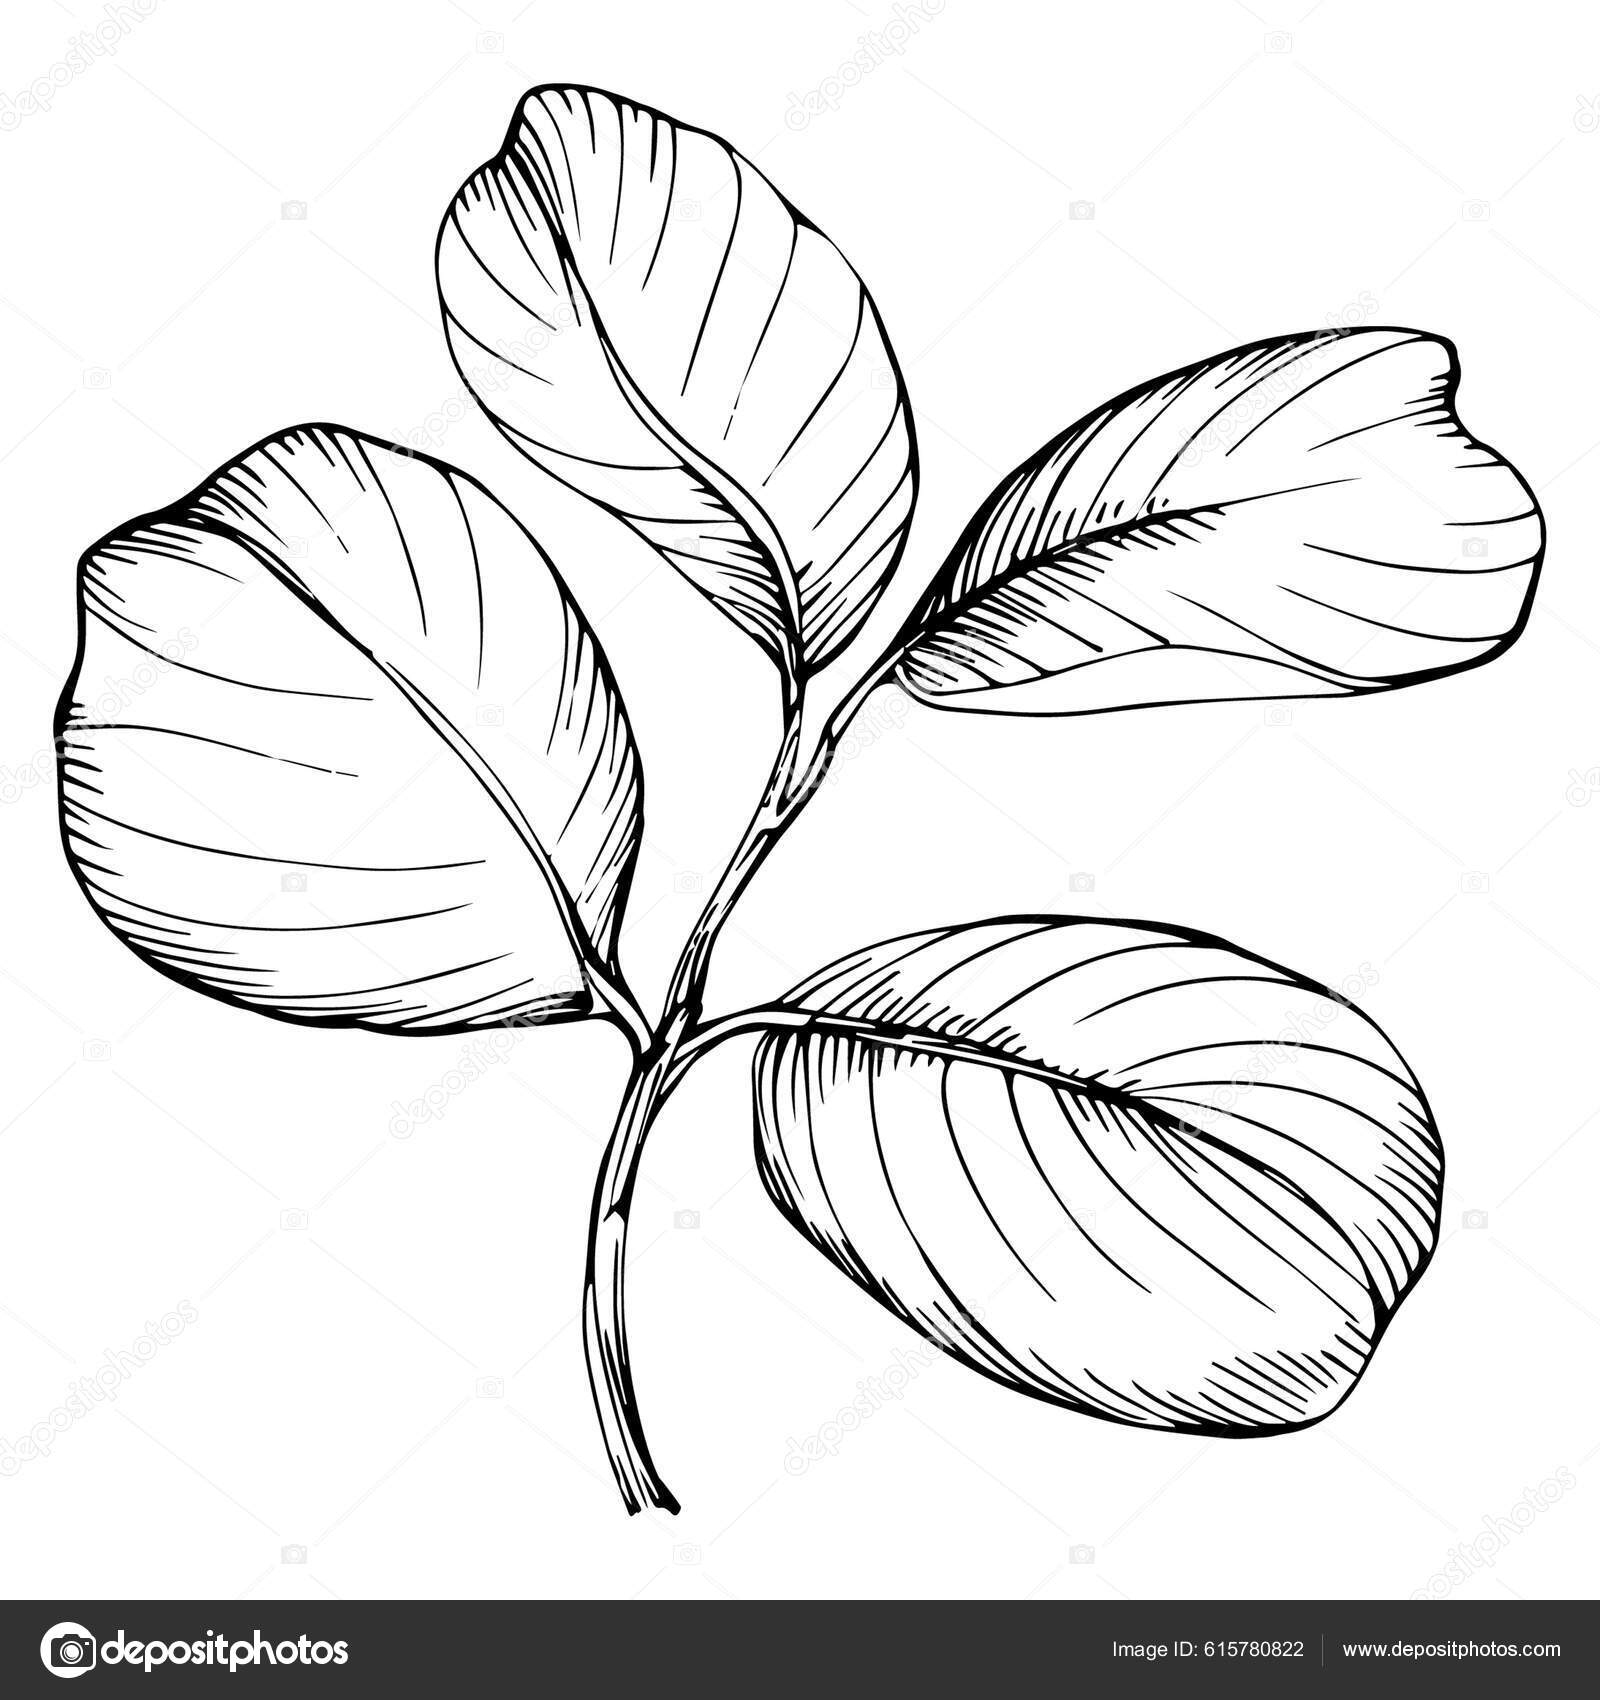 Leaves Sketch Images - Free Download on Freepik